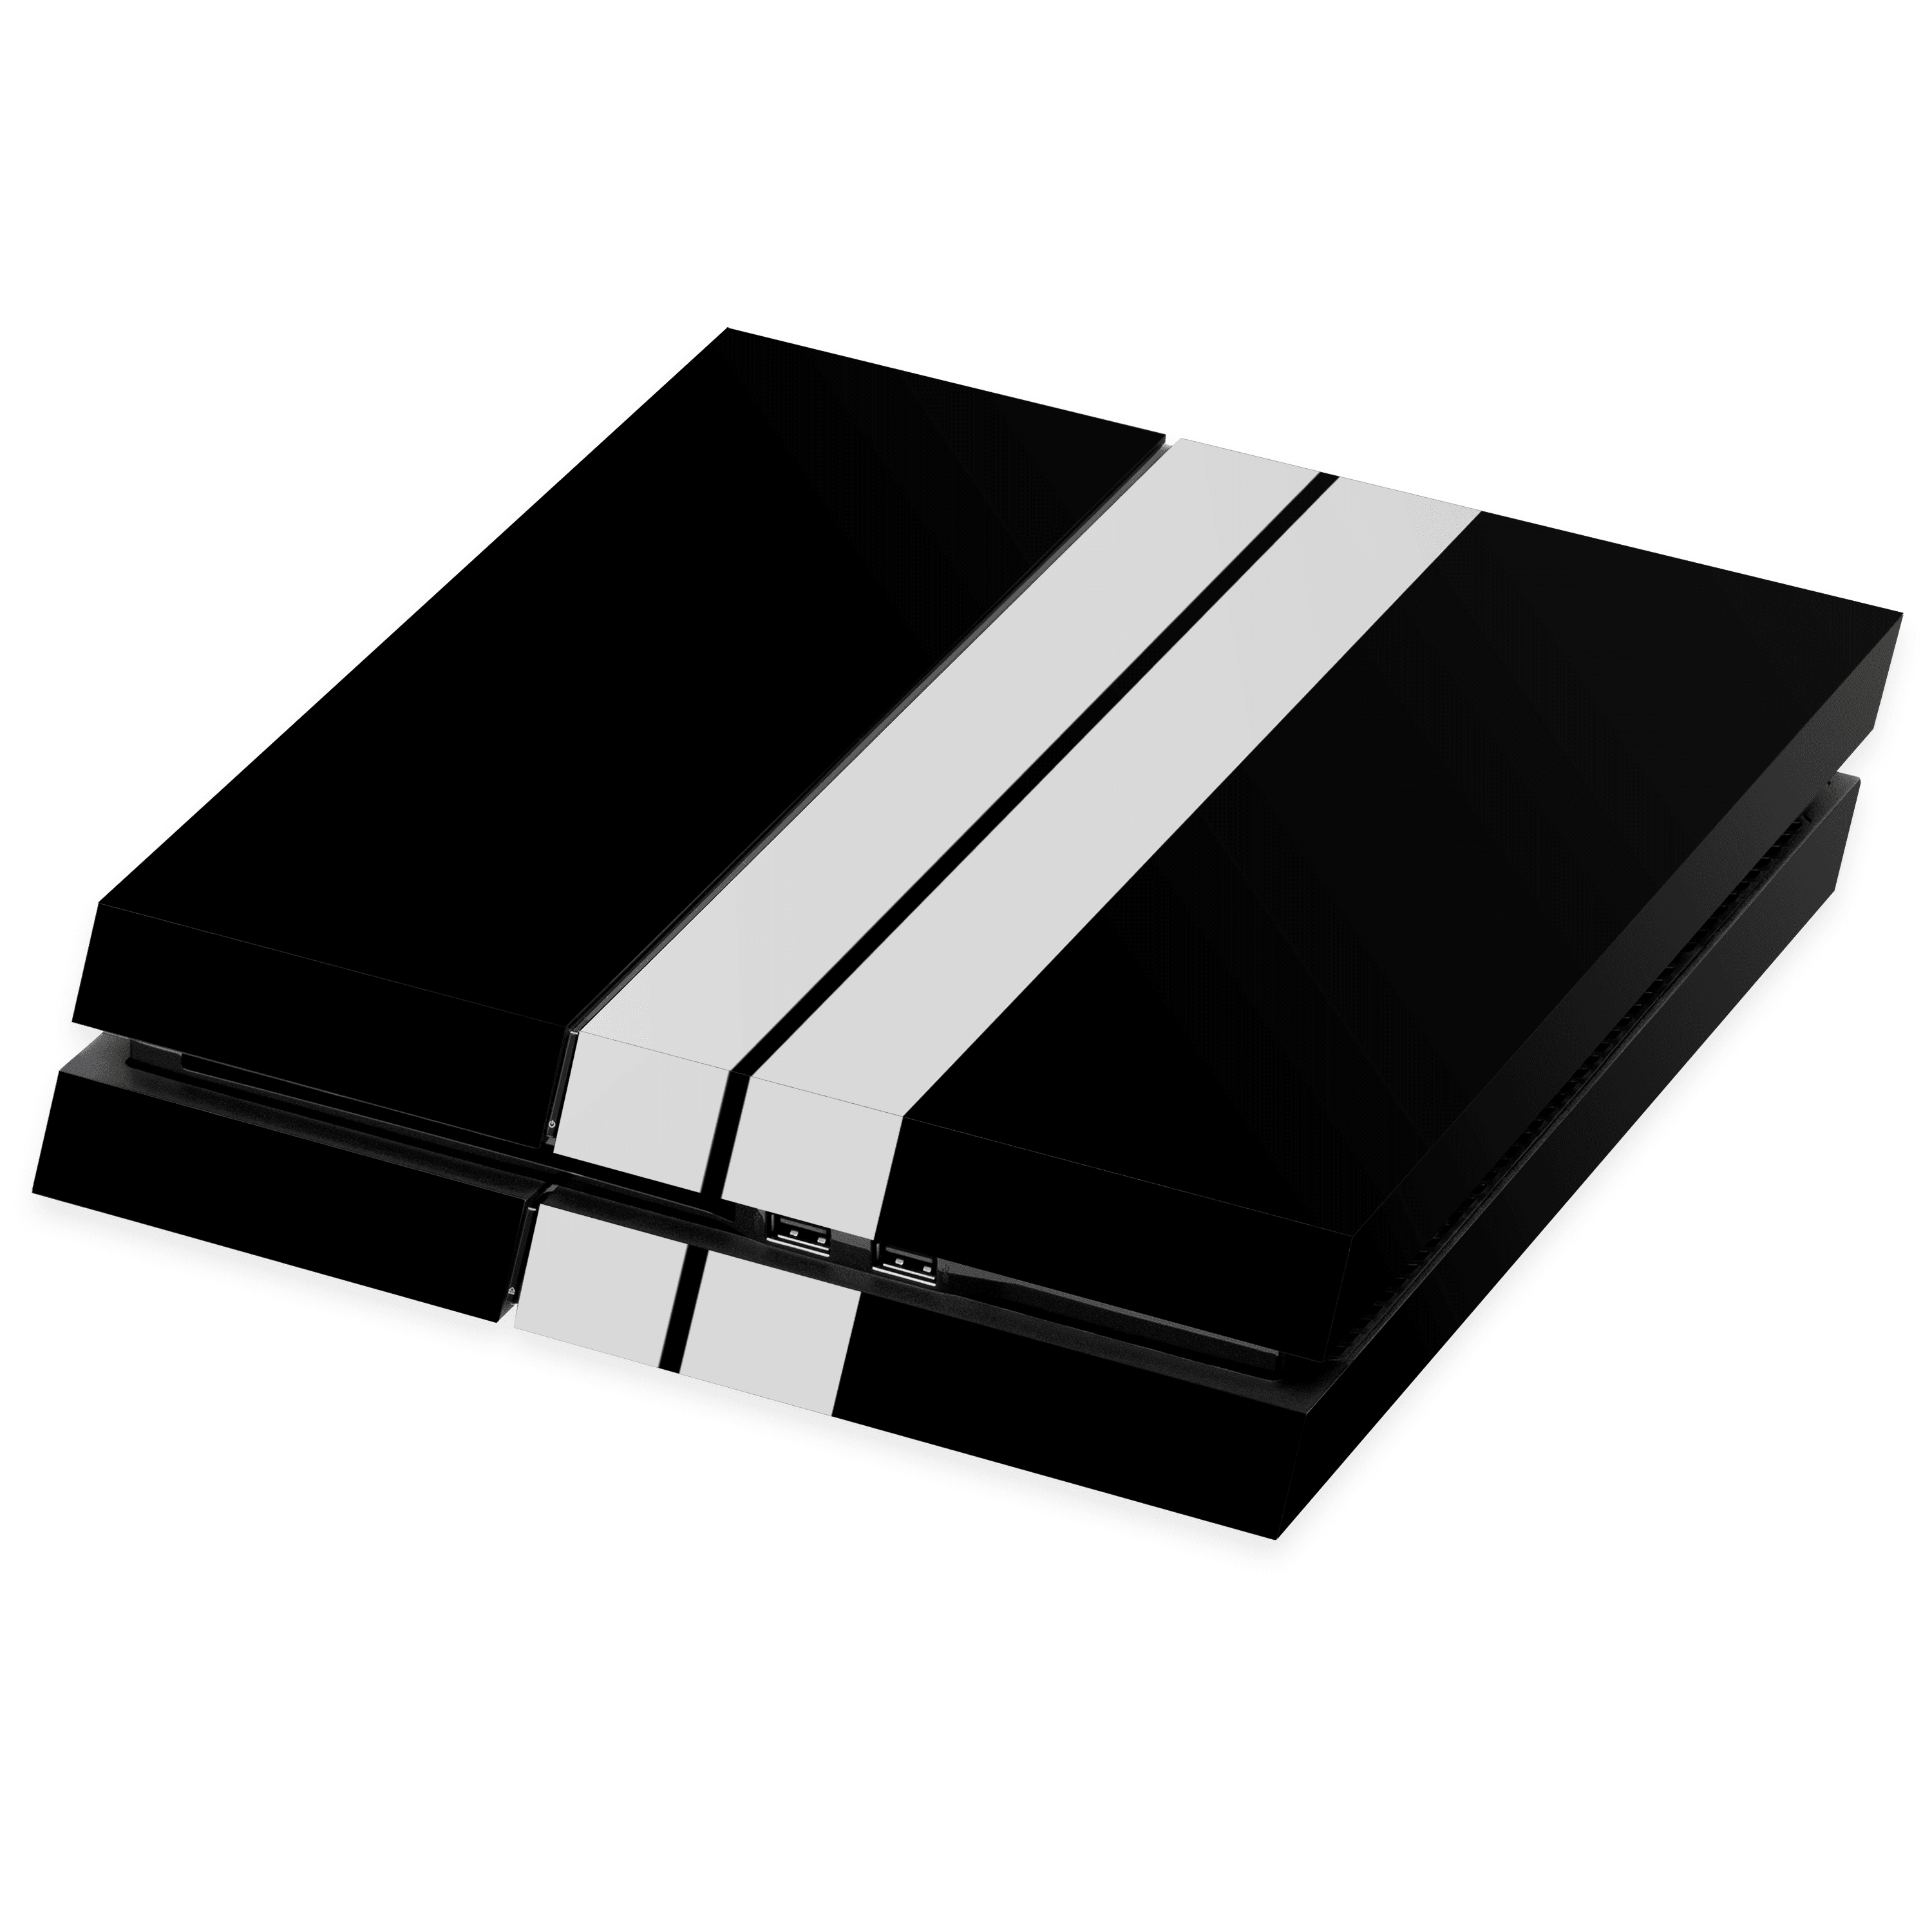 PlayStation 4 Skin Two White Stripes on Black